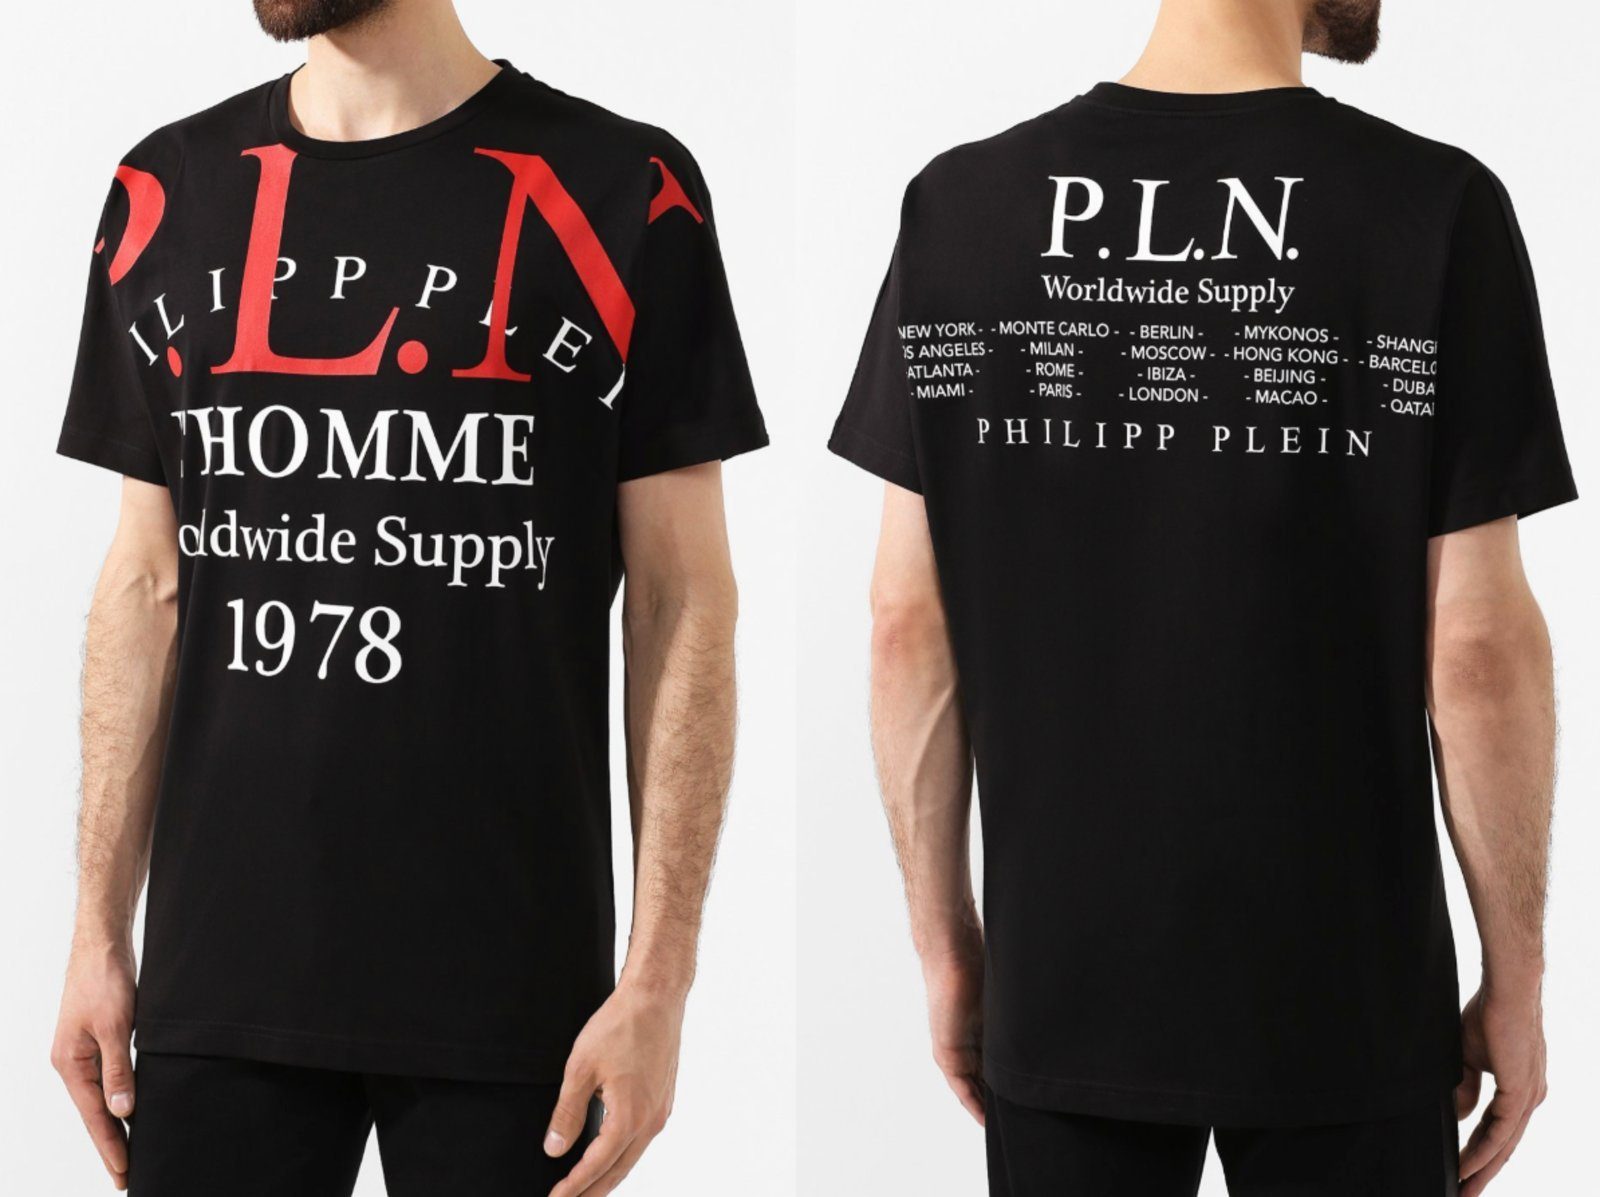 PHILIPP PLEIN T-Shirt Philipp Plein Mens Cult Iconic Cult Gold Cut Shirt Round Neck P.L.N. T